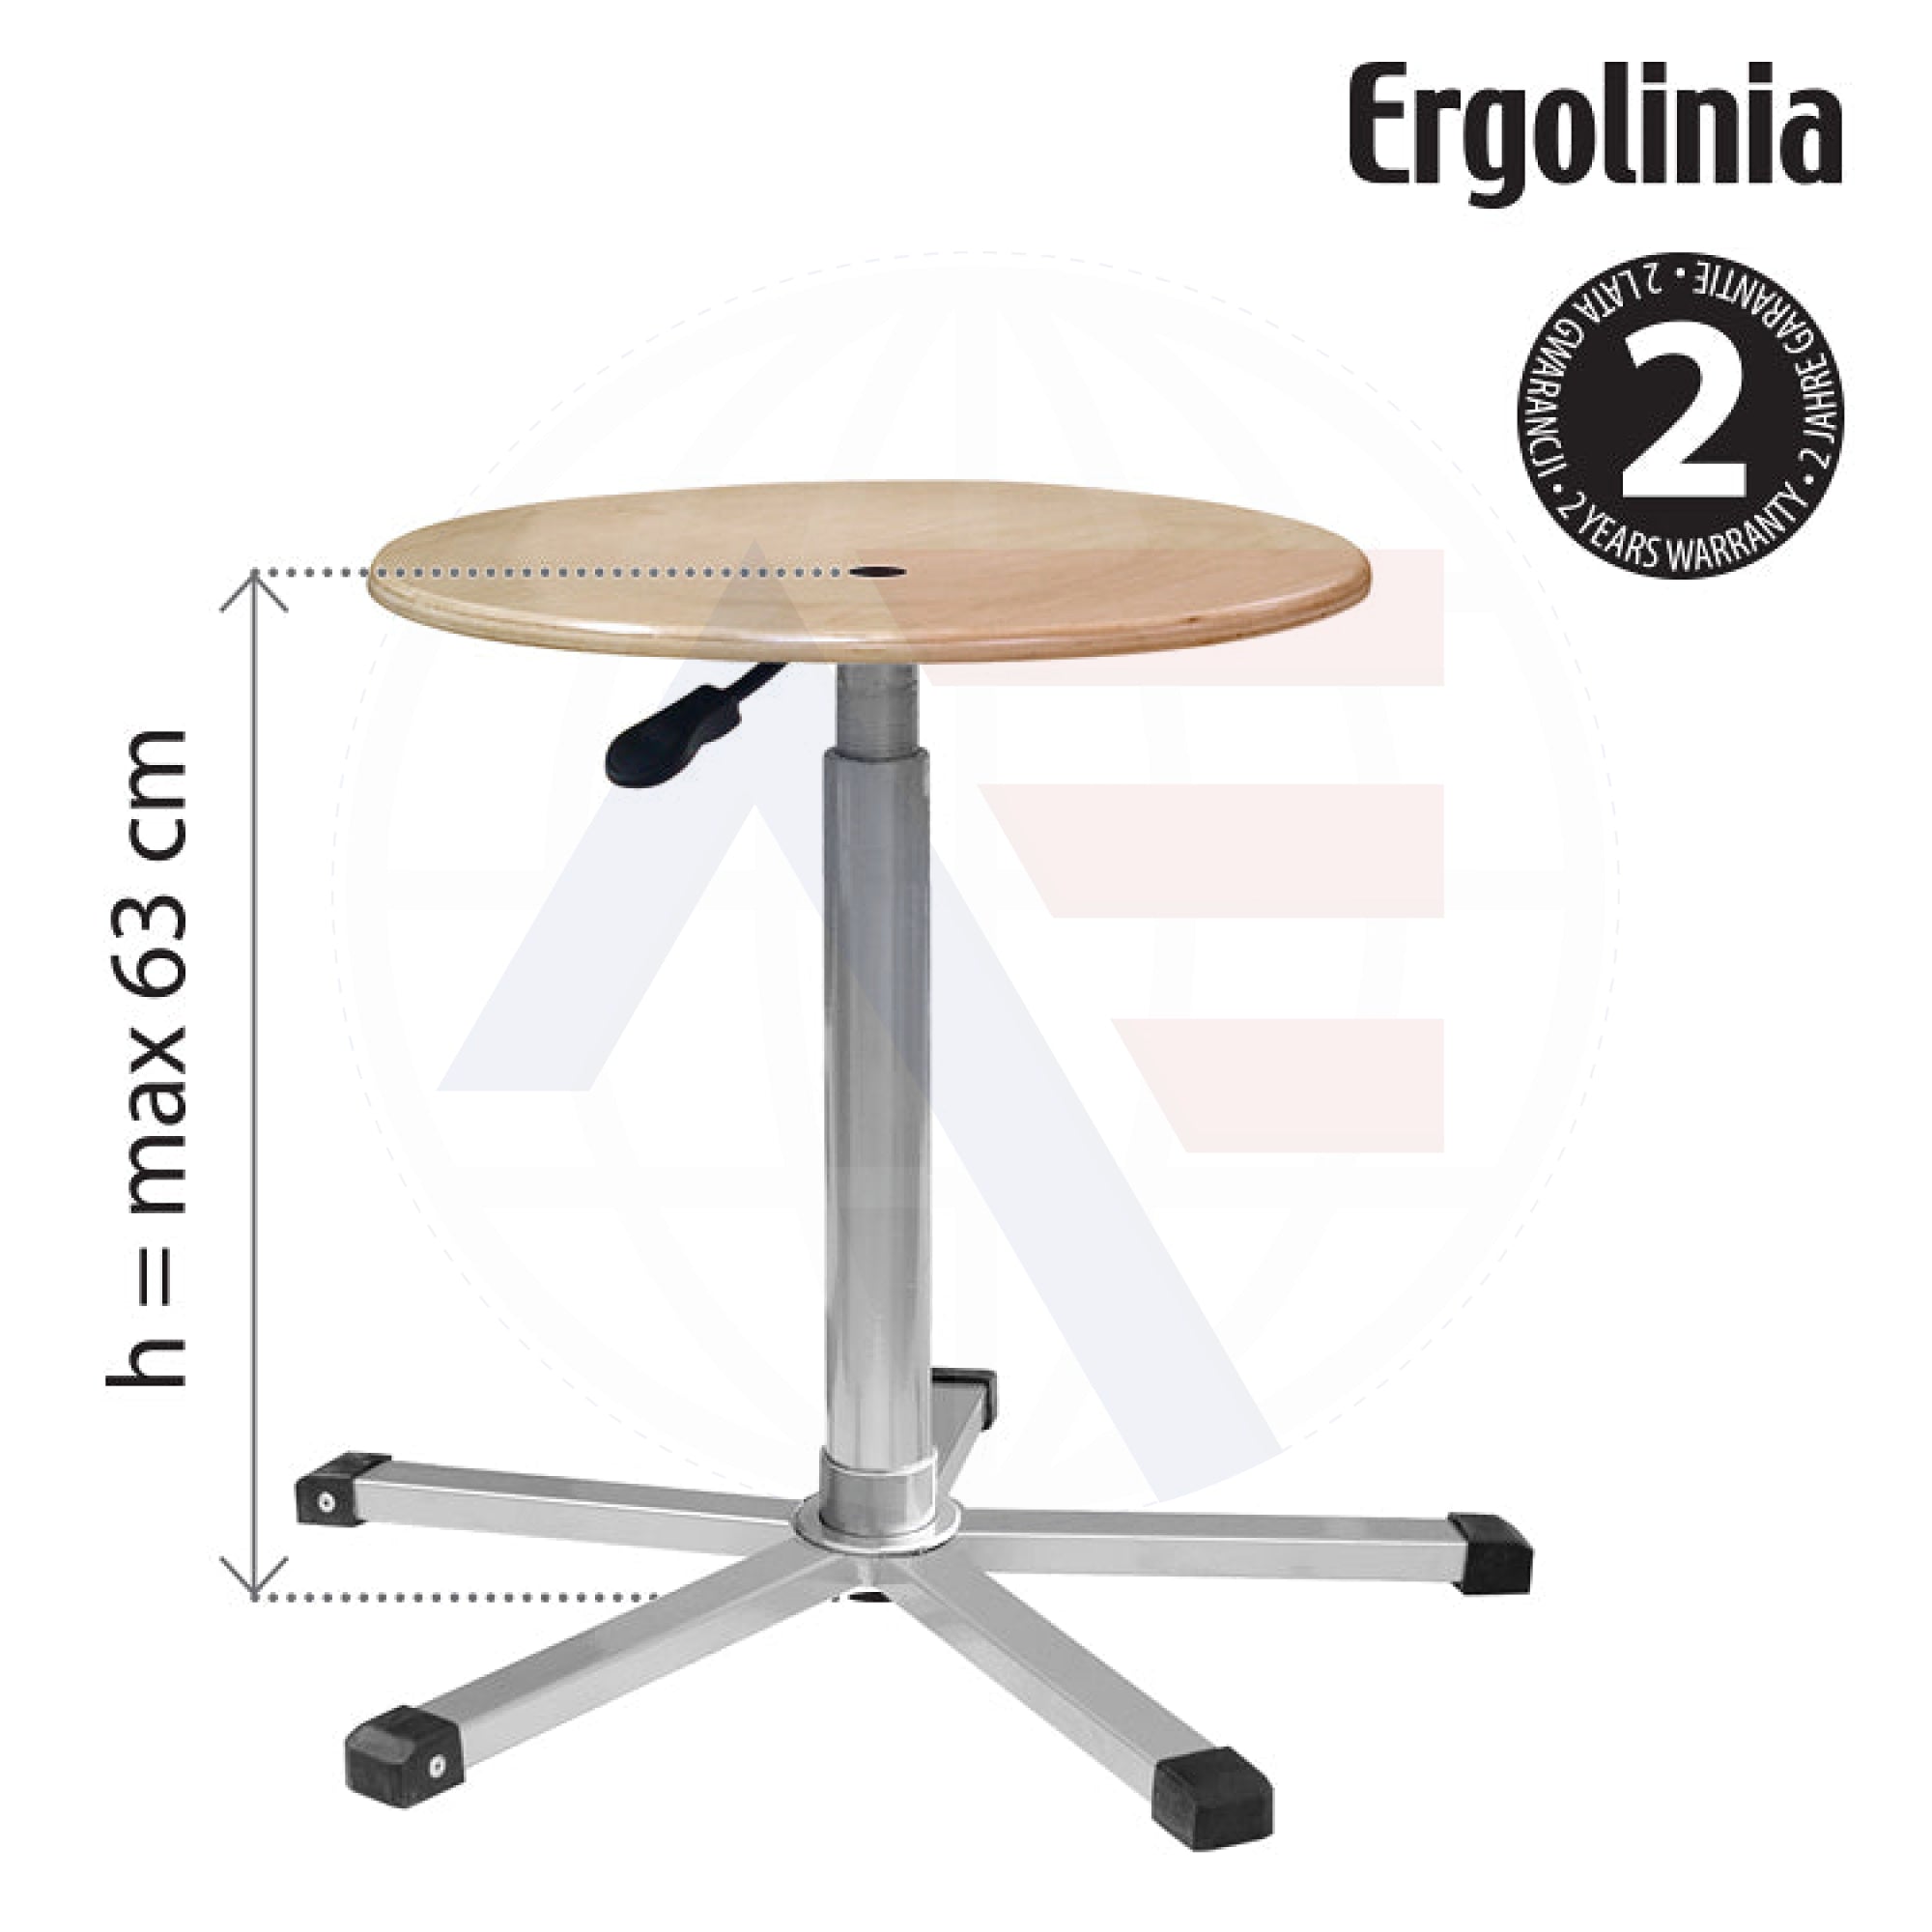 Ergolinia Evo3 Industrial Rotary Stool